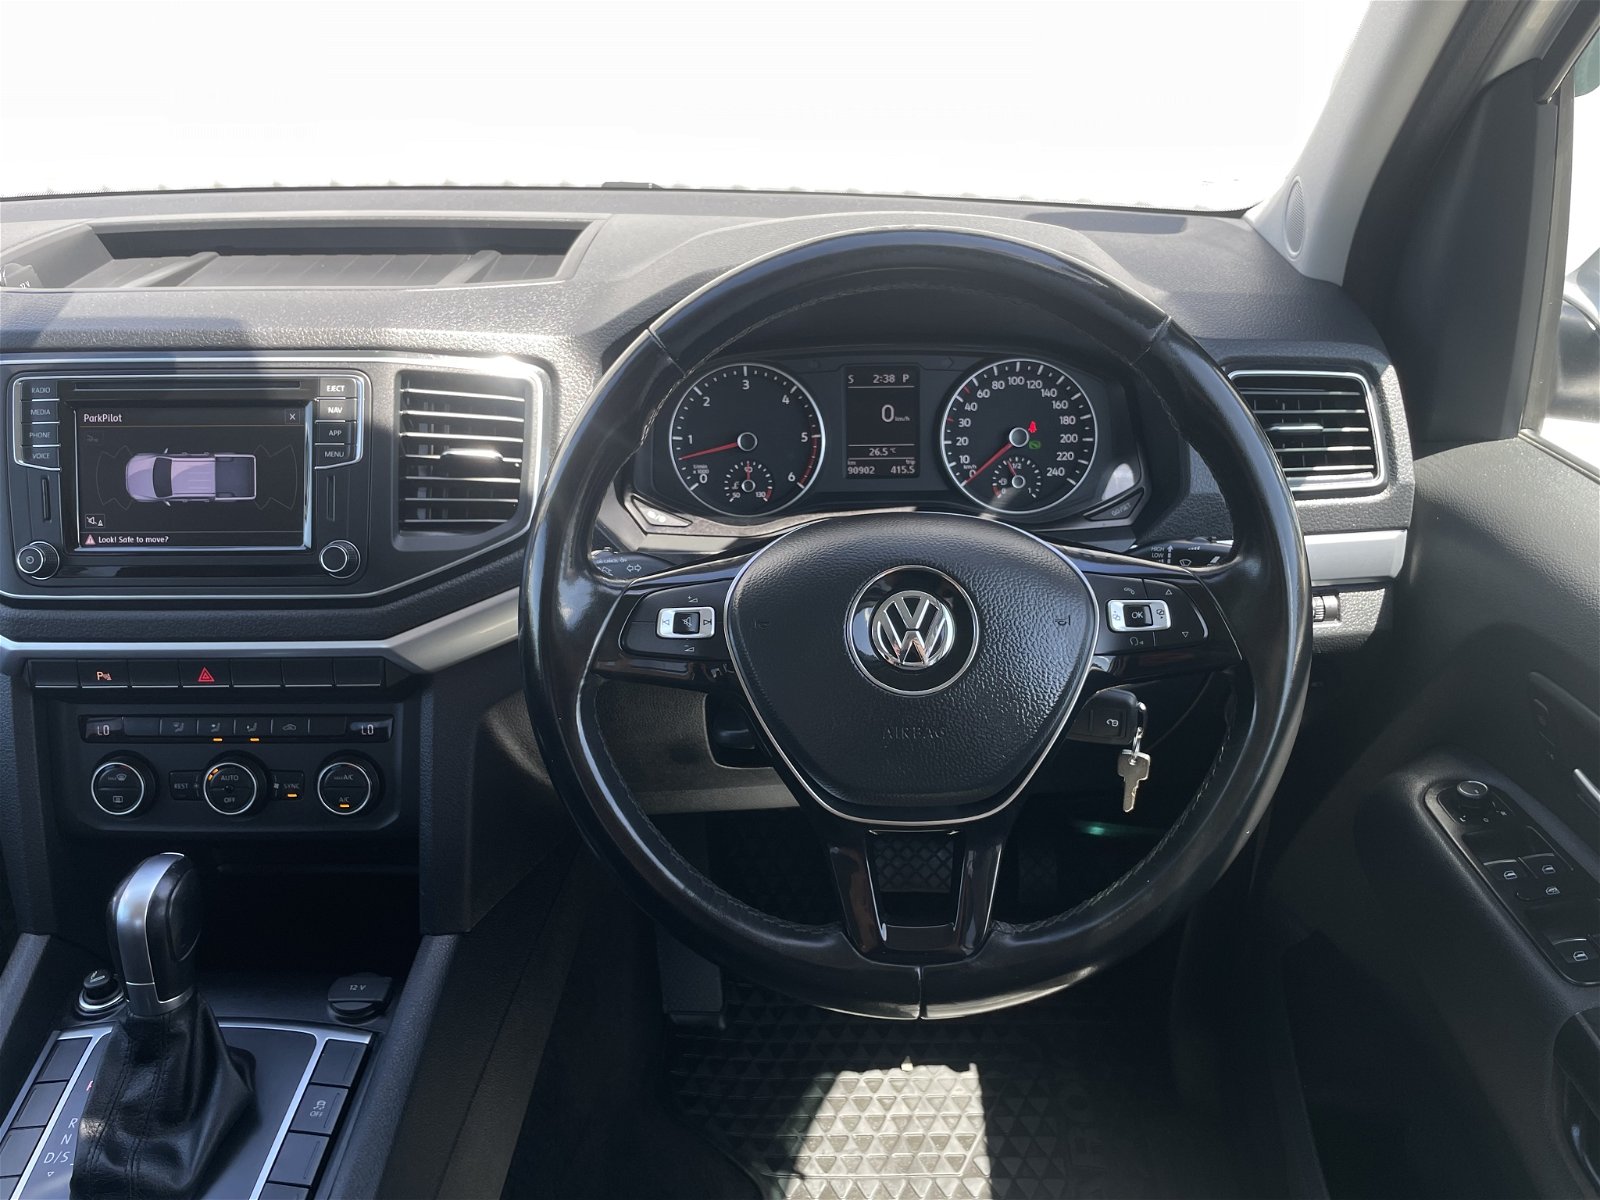 2019 Volkswagen Amarok D/C 4M AWD V6 550NM 3.0TD